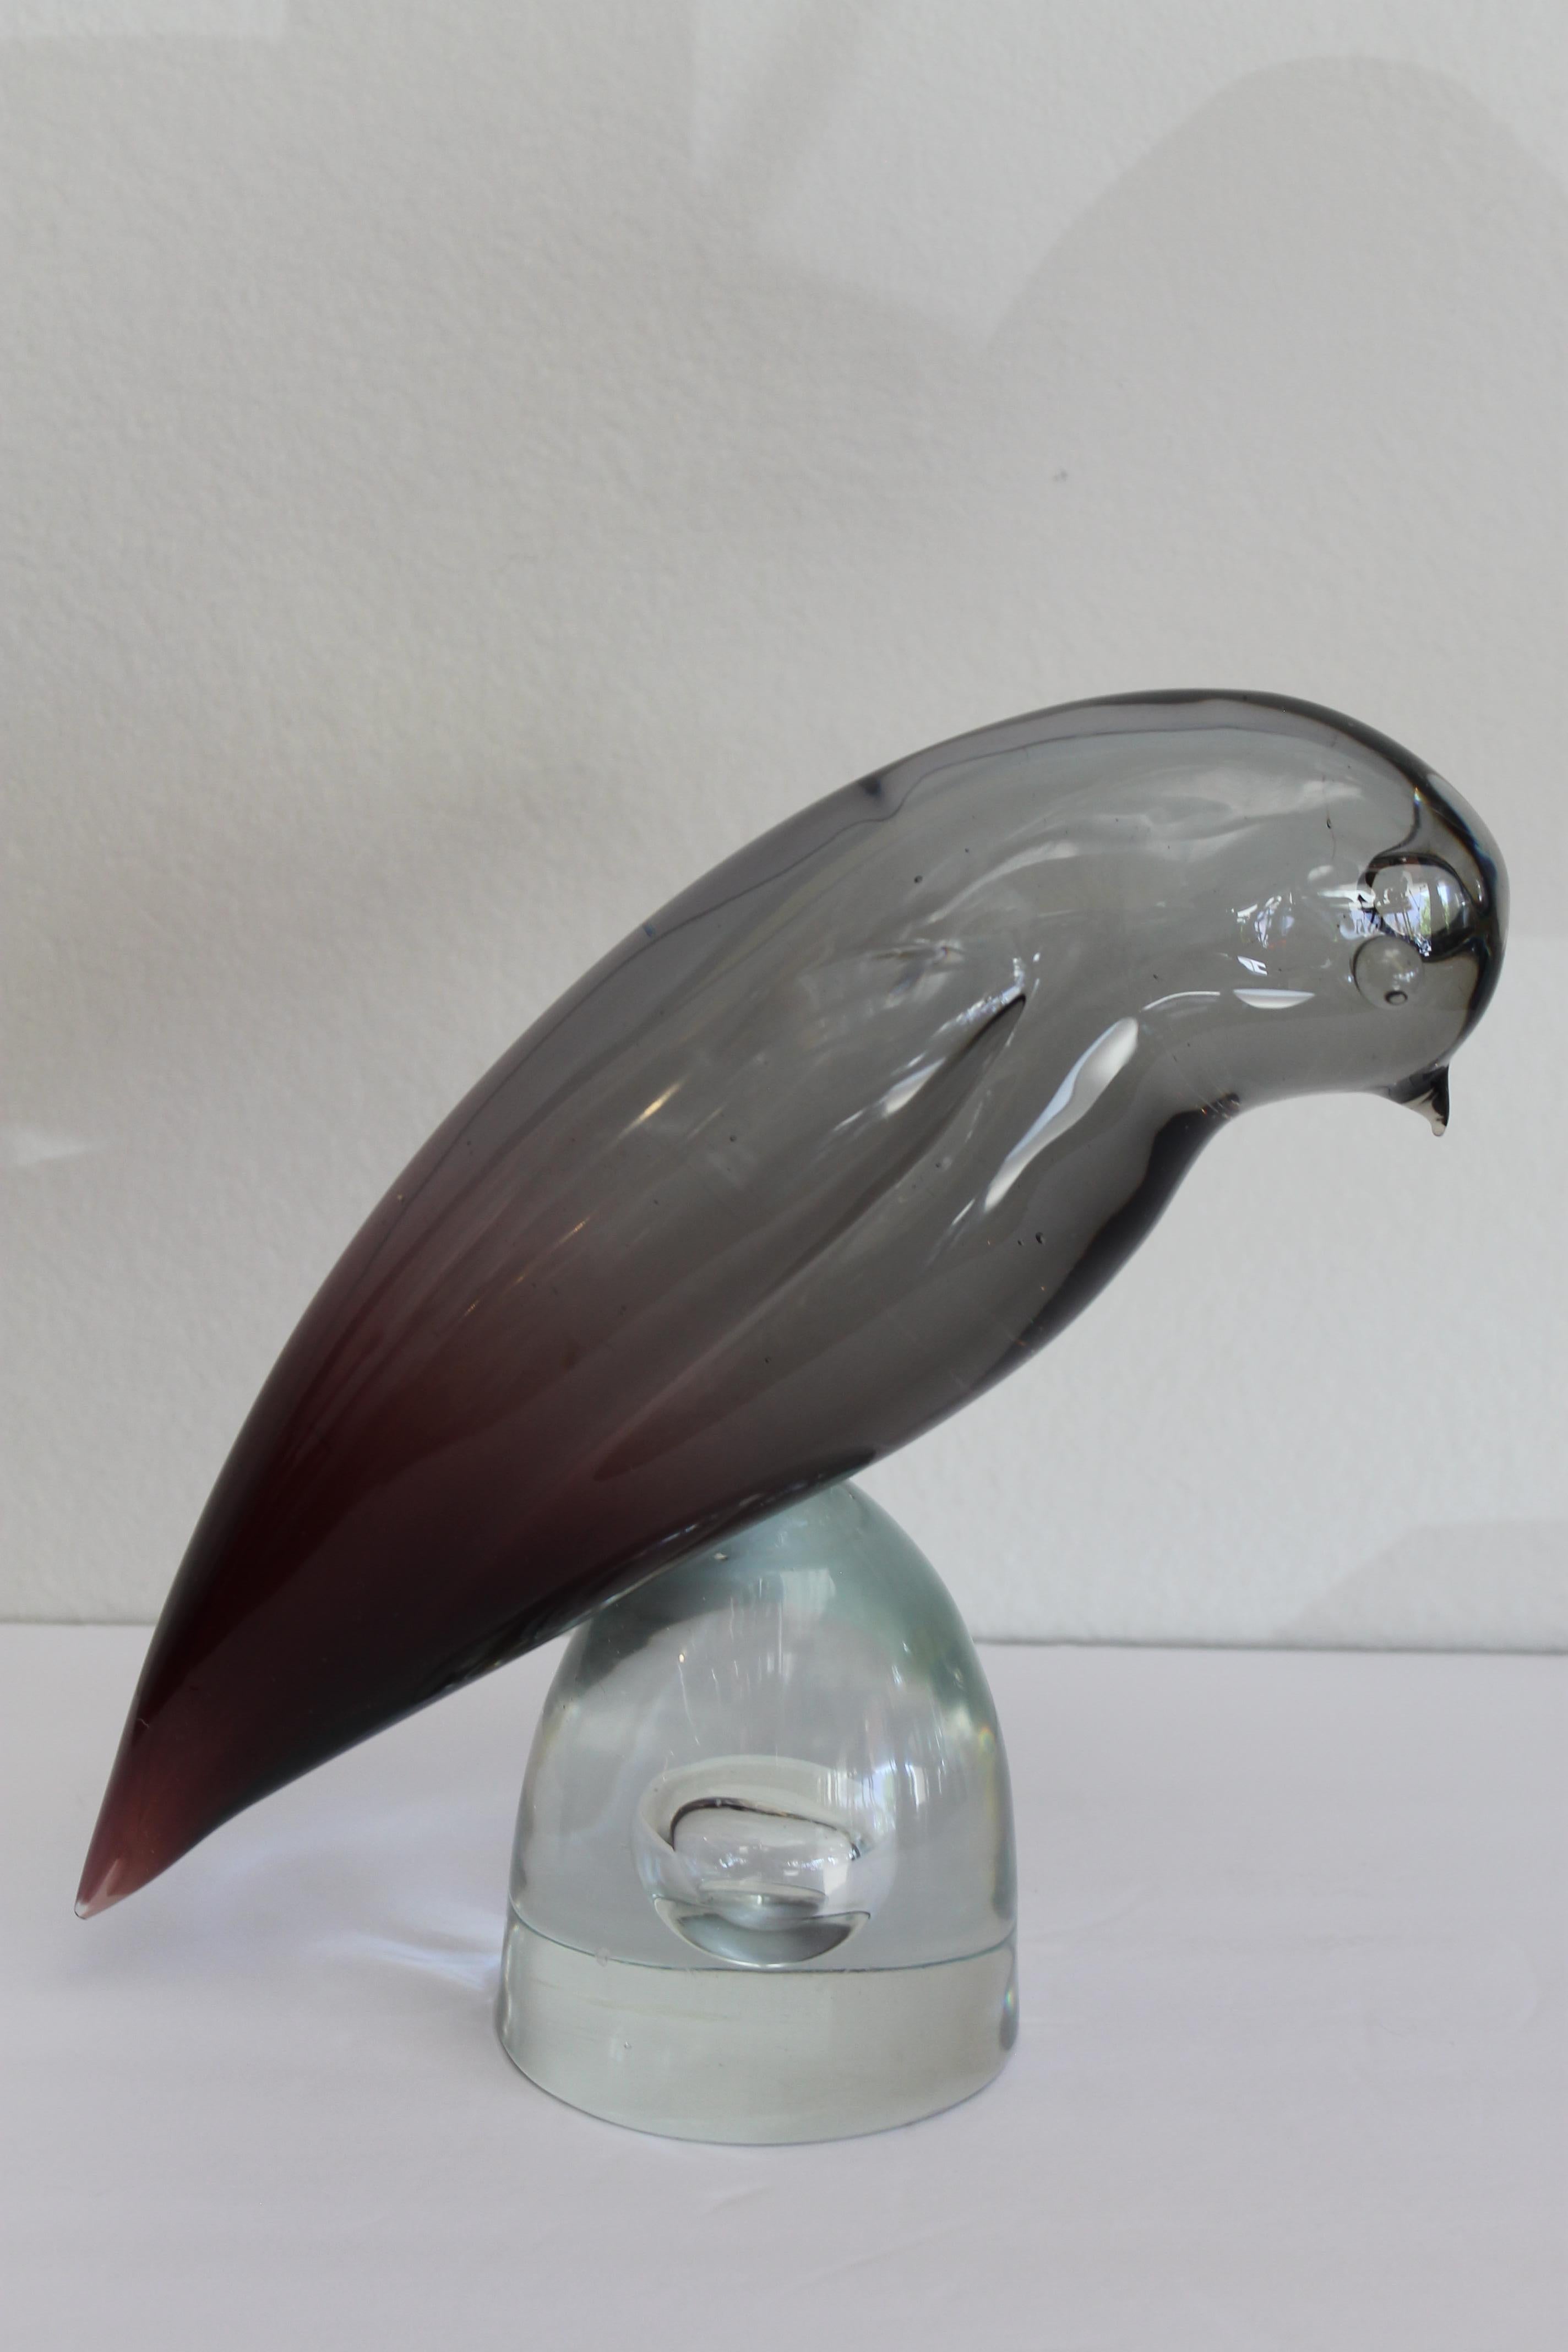 Italian glass bird, possibly a parakeet. Bird measures 10.25